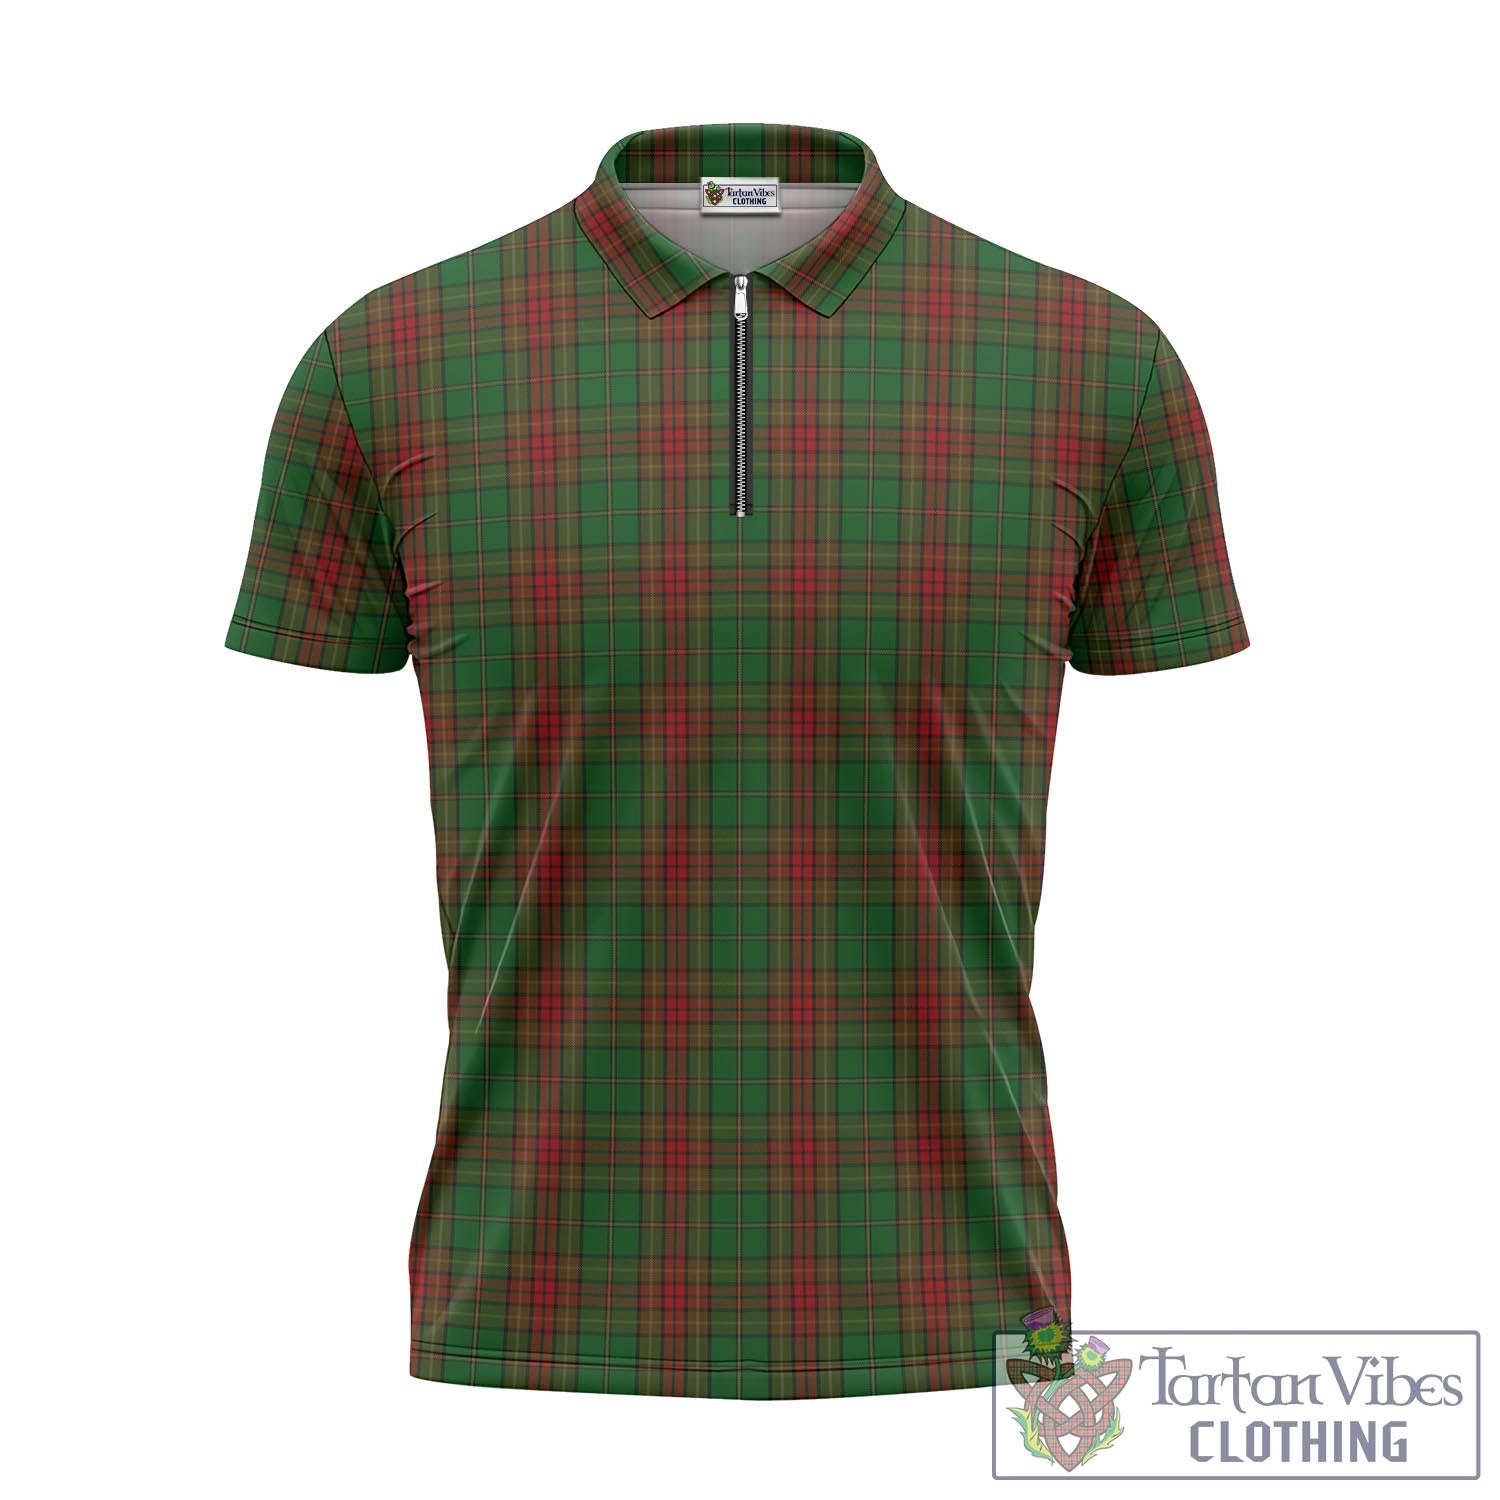 Tartan Vibes Clothing Cavan County Ireland Tartan Zipper Polo Shirt